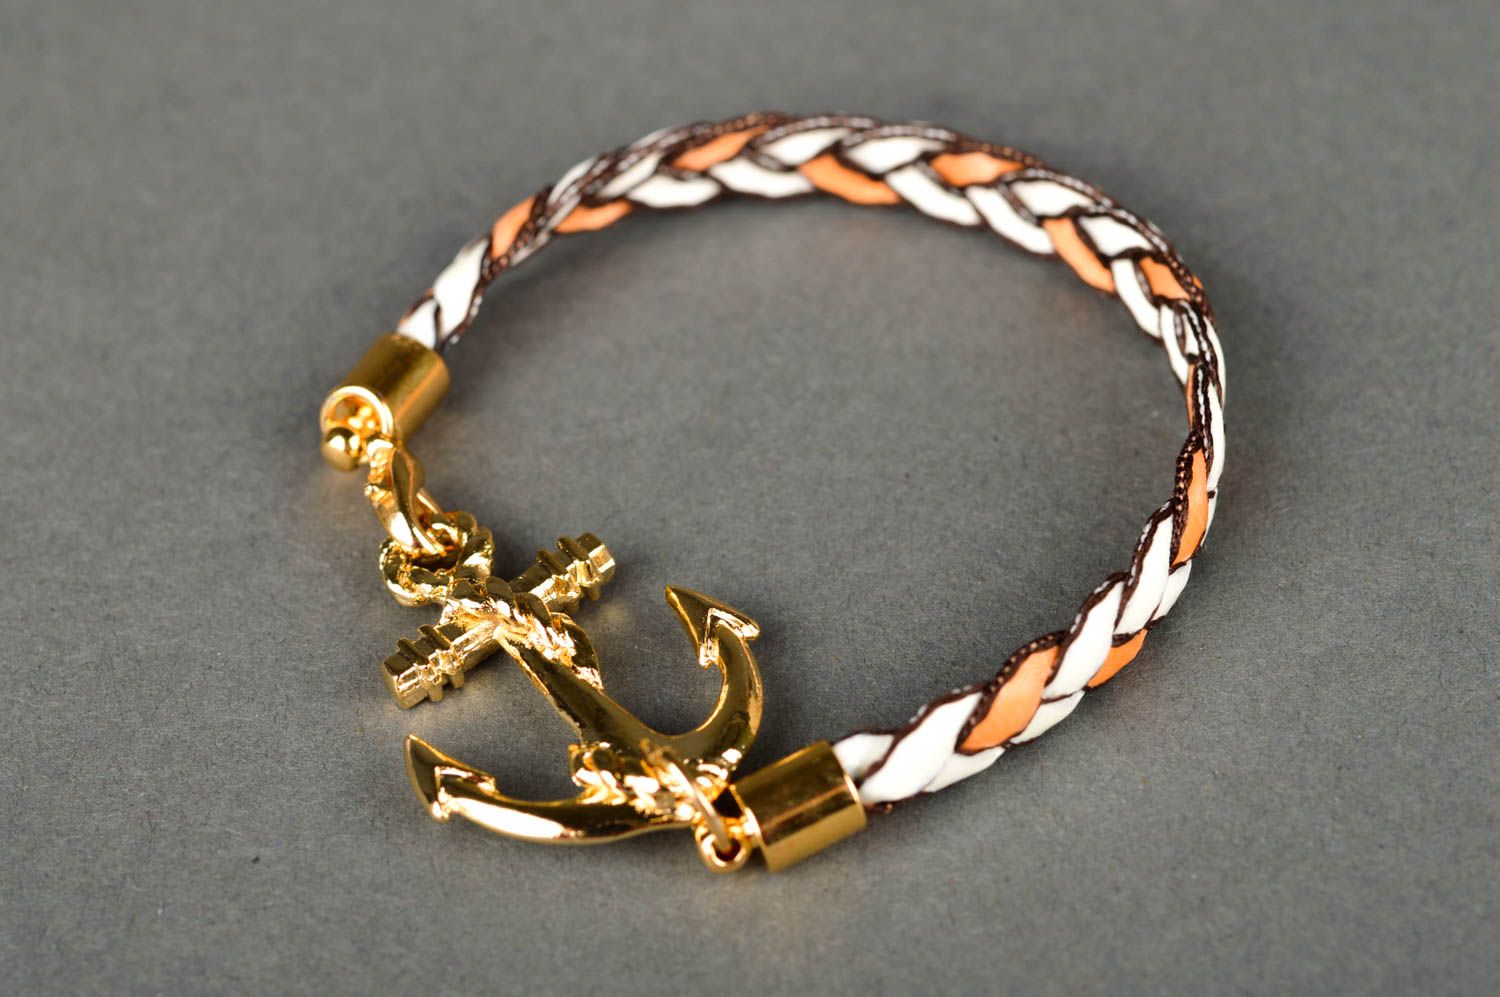 Handmade bracelet wrist bracelet designer accessories fashion jewelry cool gifts photo 5